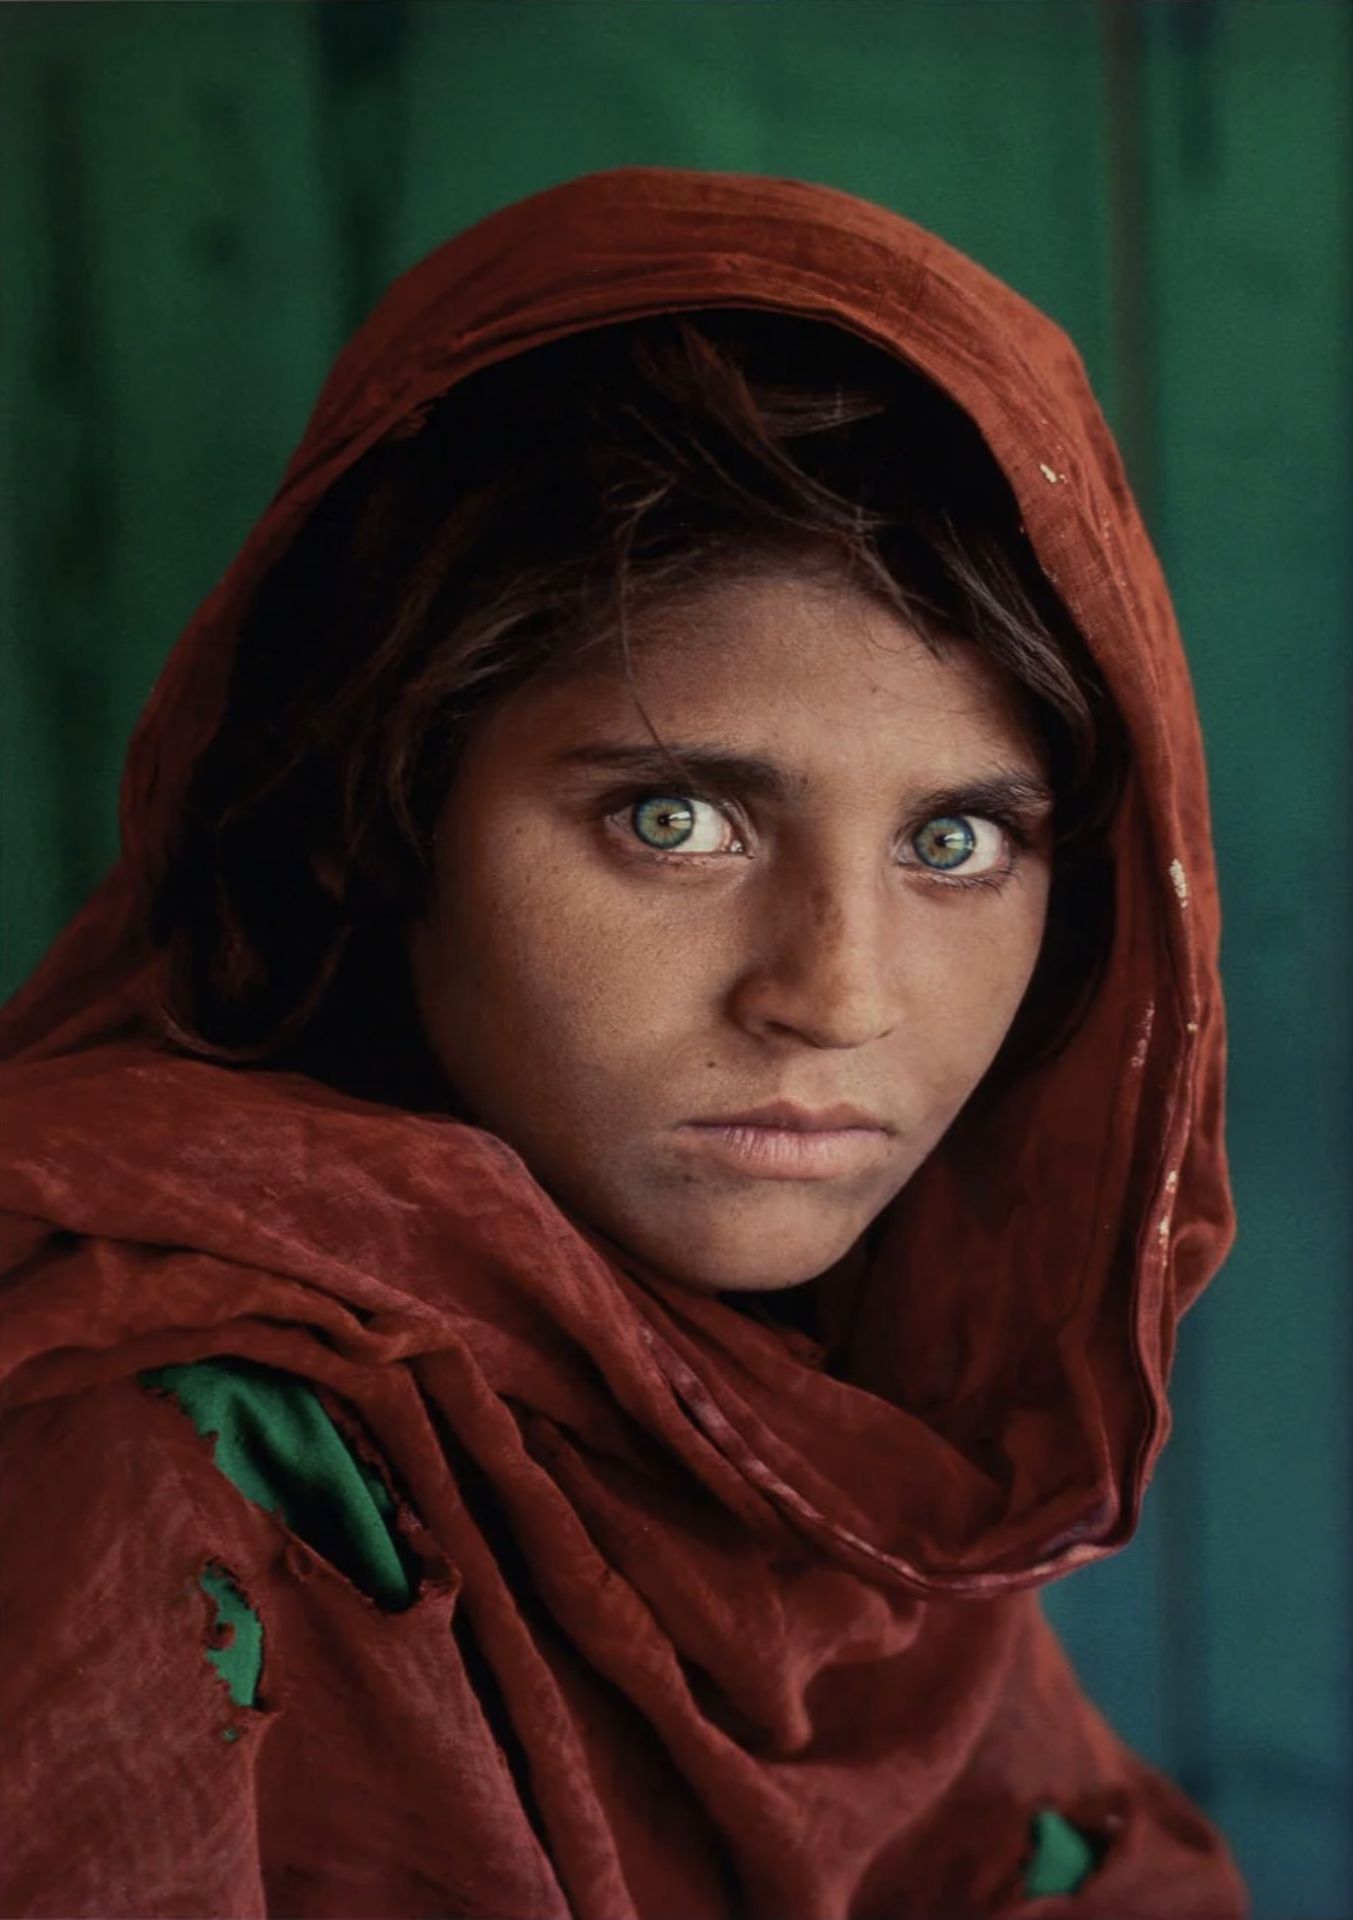 Steve McCurry "Afghan Girl" Print